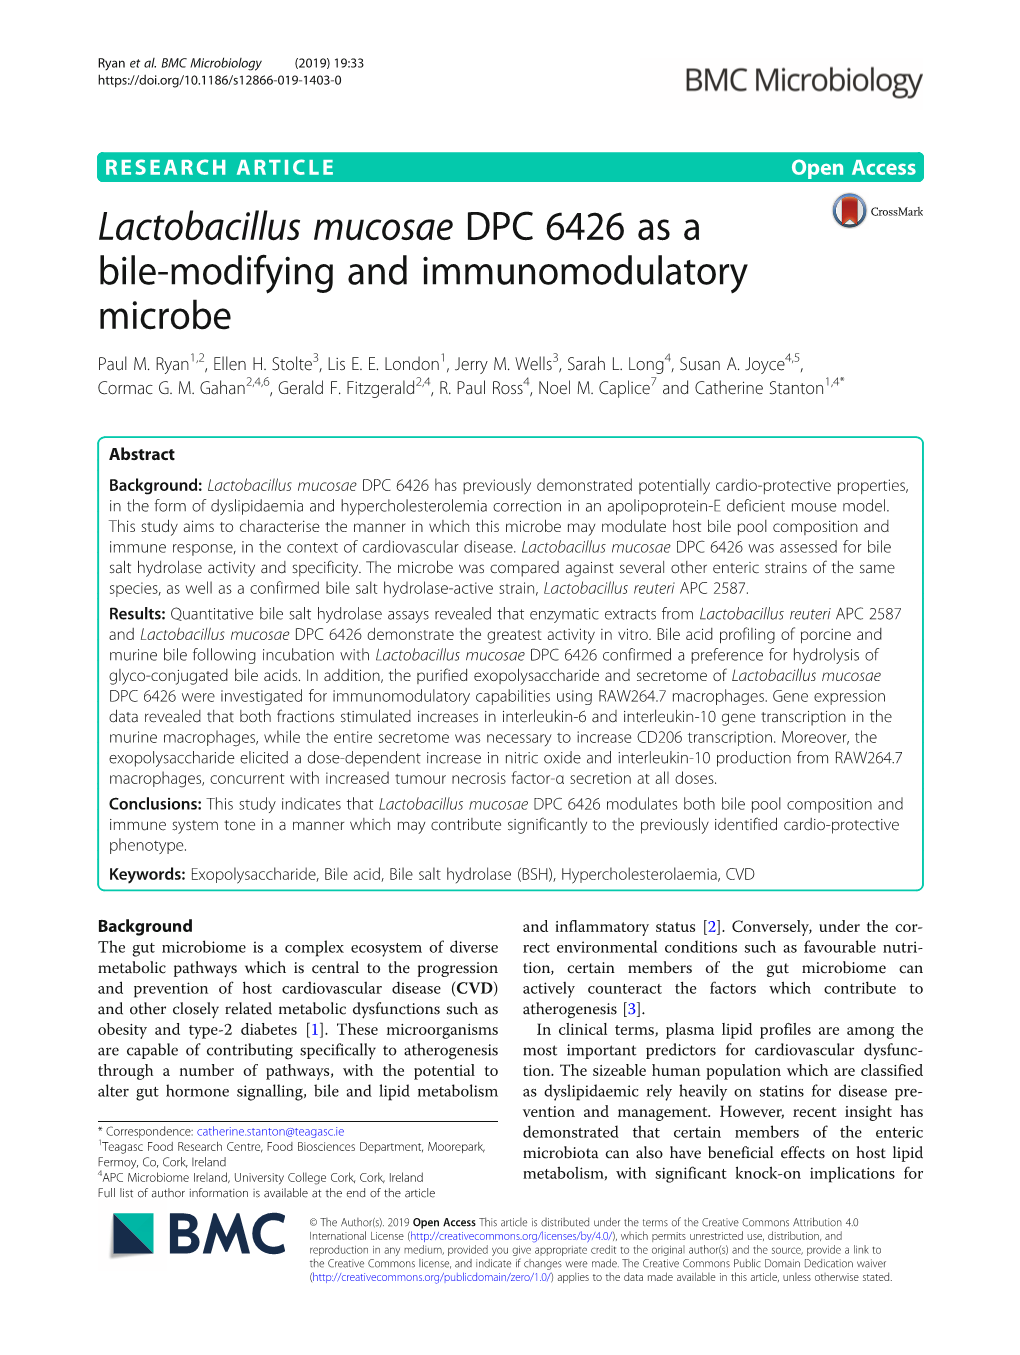 Lactobacillus Mucosae DPC 6426 As a Bile-Modifying and Immunomodulatory Microbe Paul M